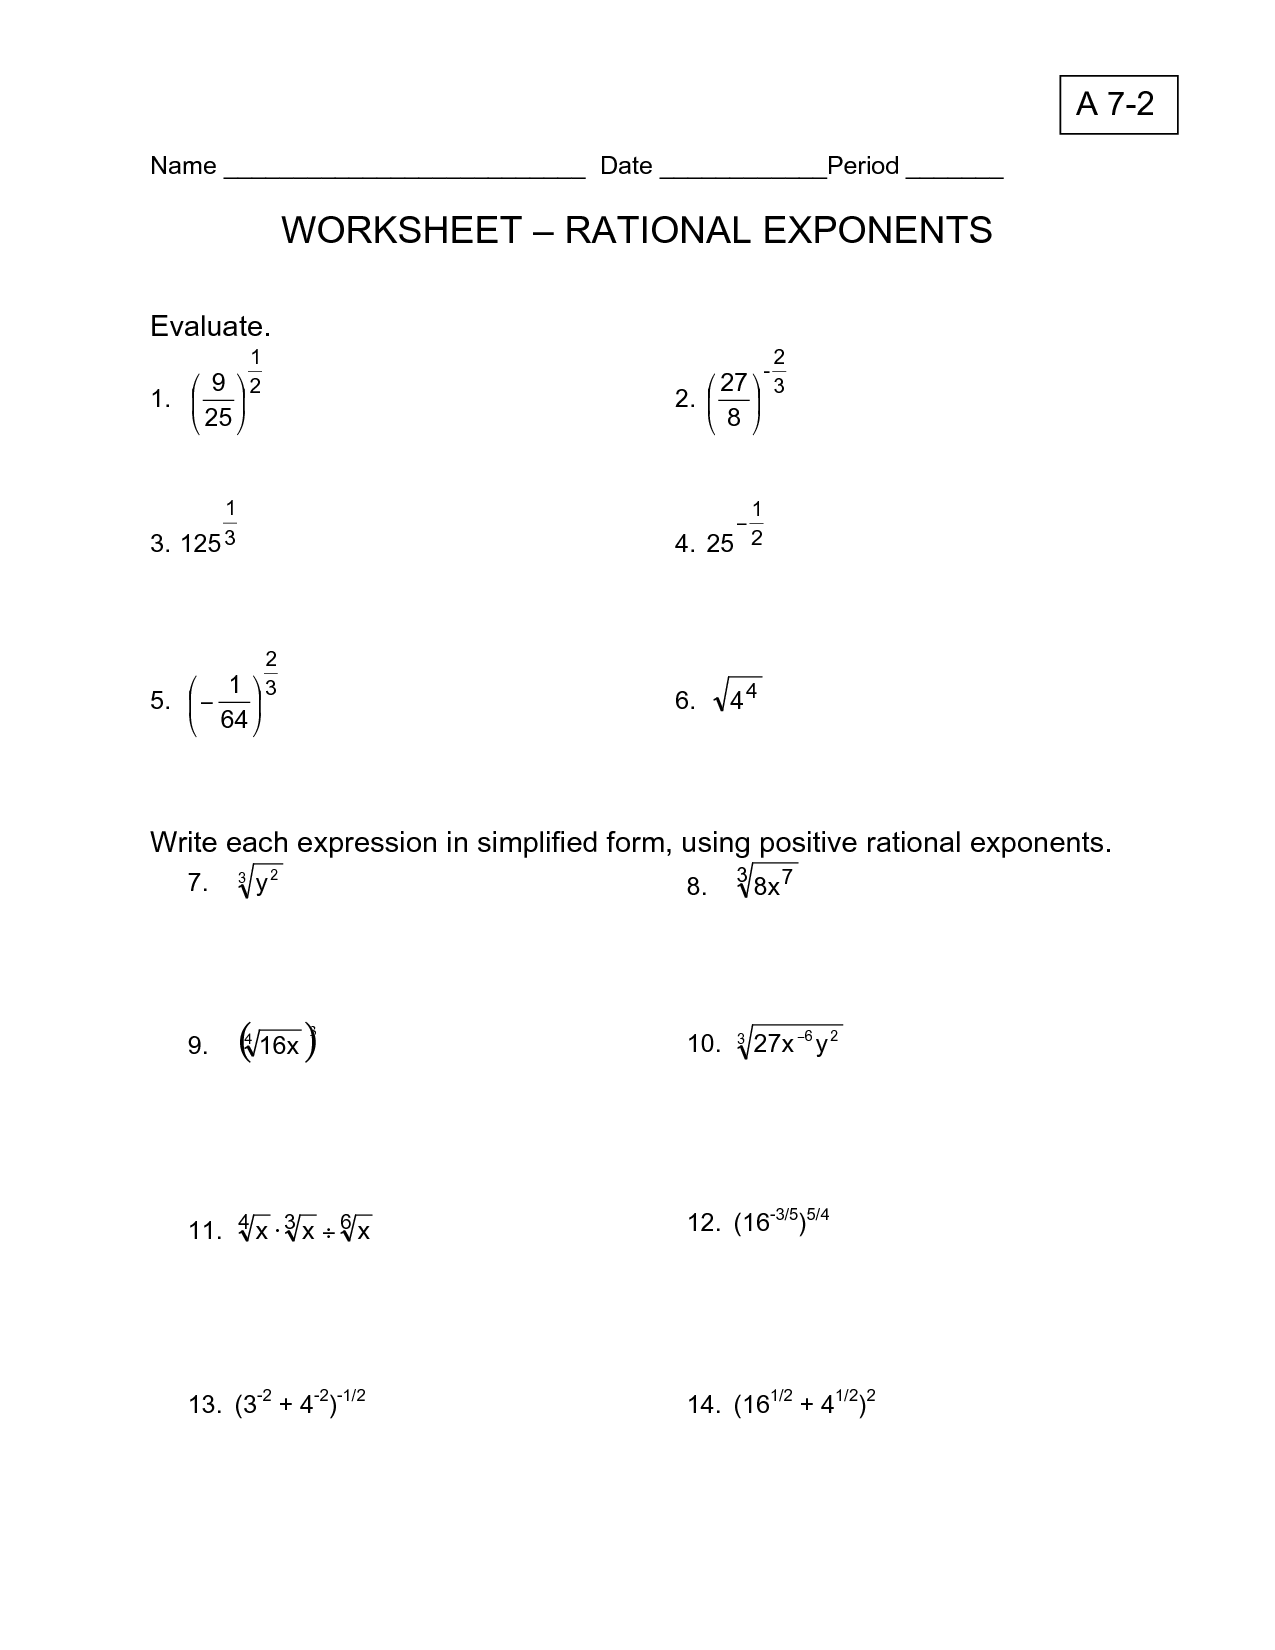 Rational Exponents Worksheet Answers Image